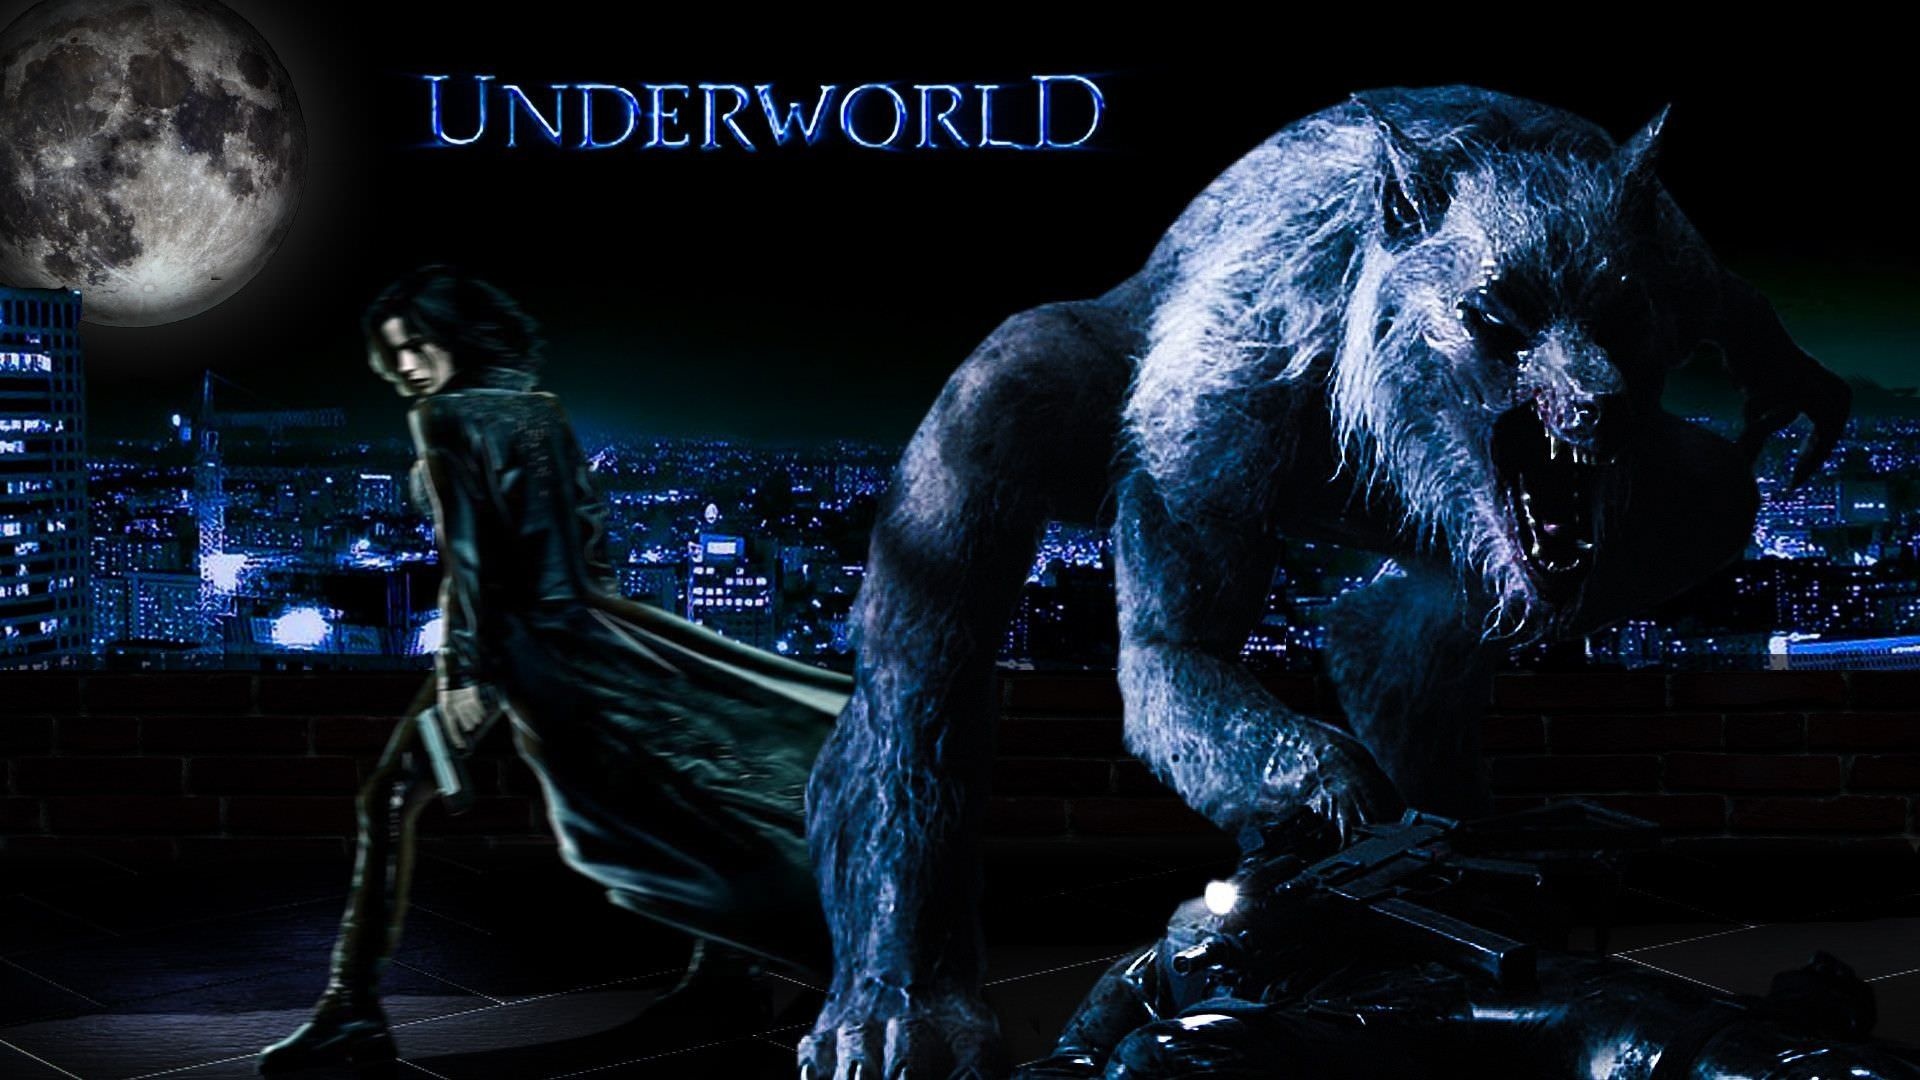 Michael, Underworld, Top free backgrounds, 1920x1080 Full HD Desktop